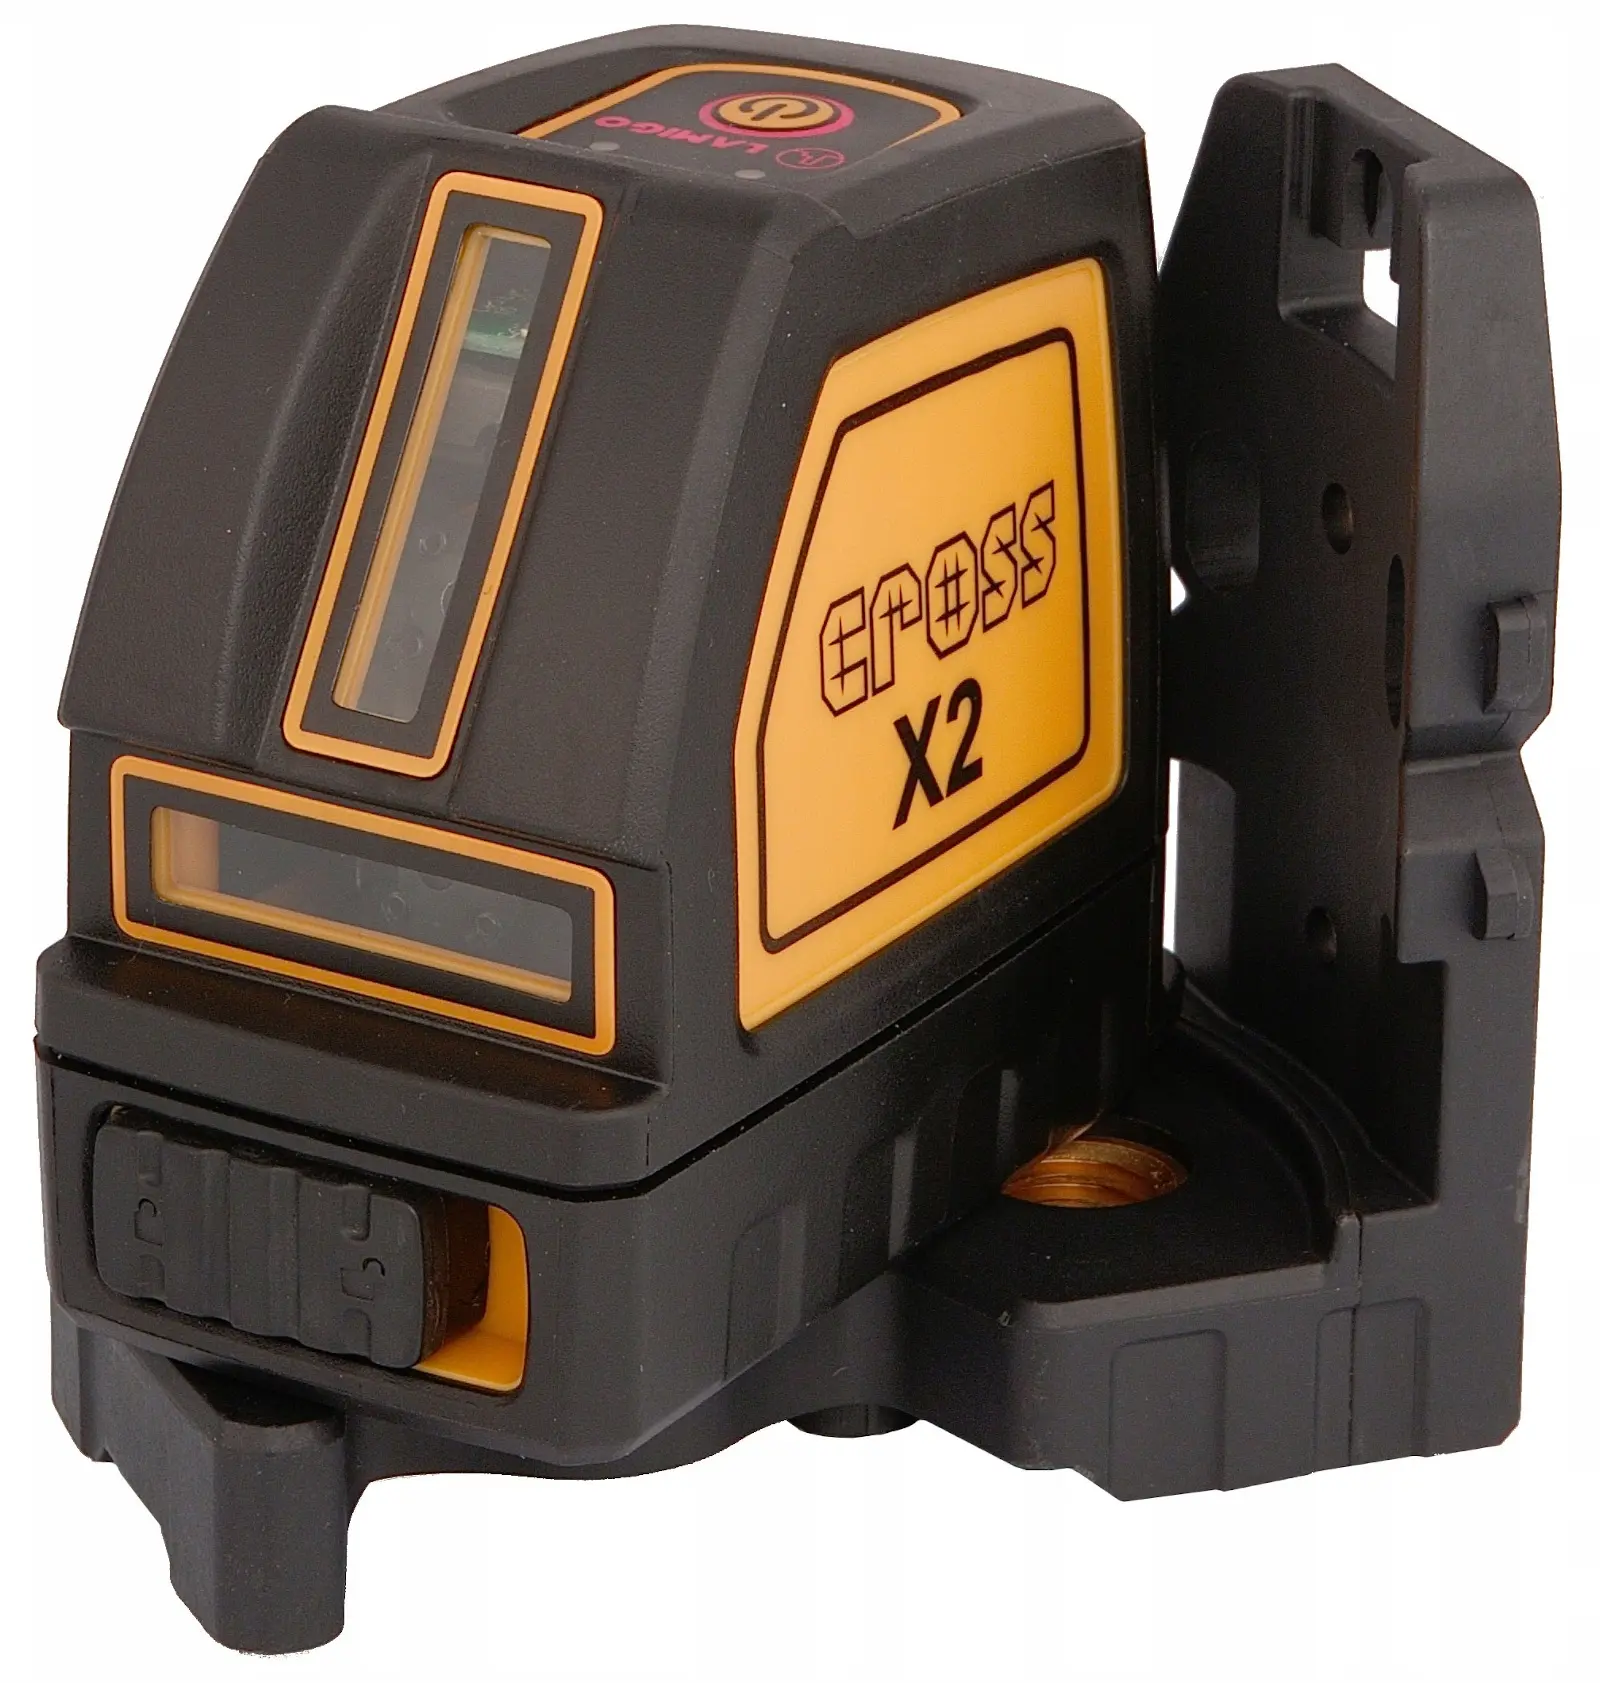 Niwelator laserowy liniowy CROSS X2 LAMIGO 02